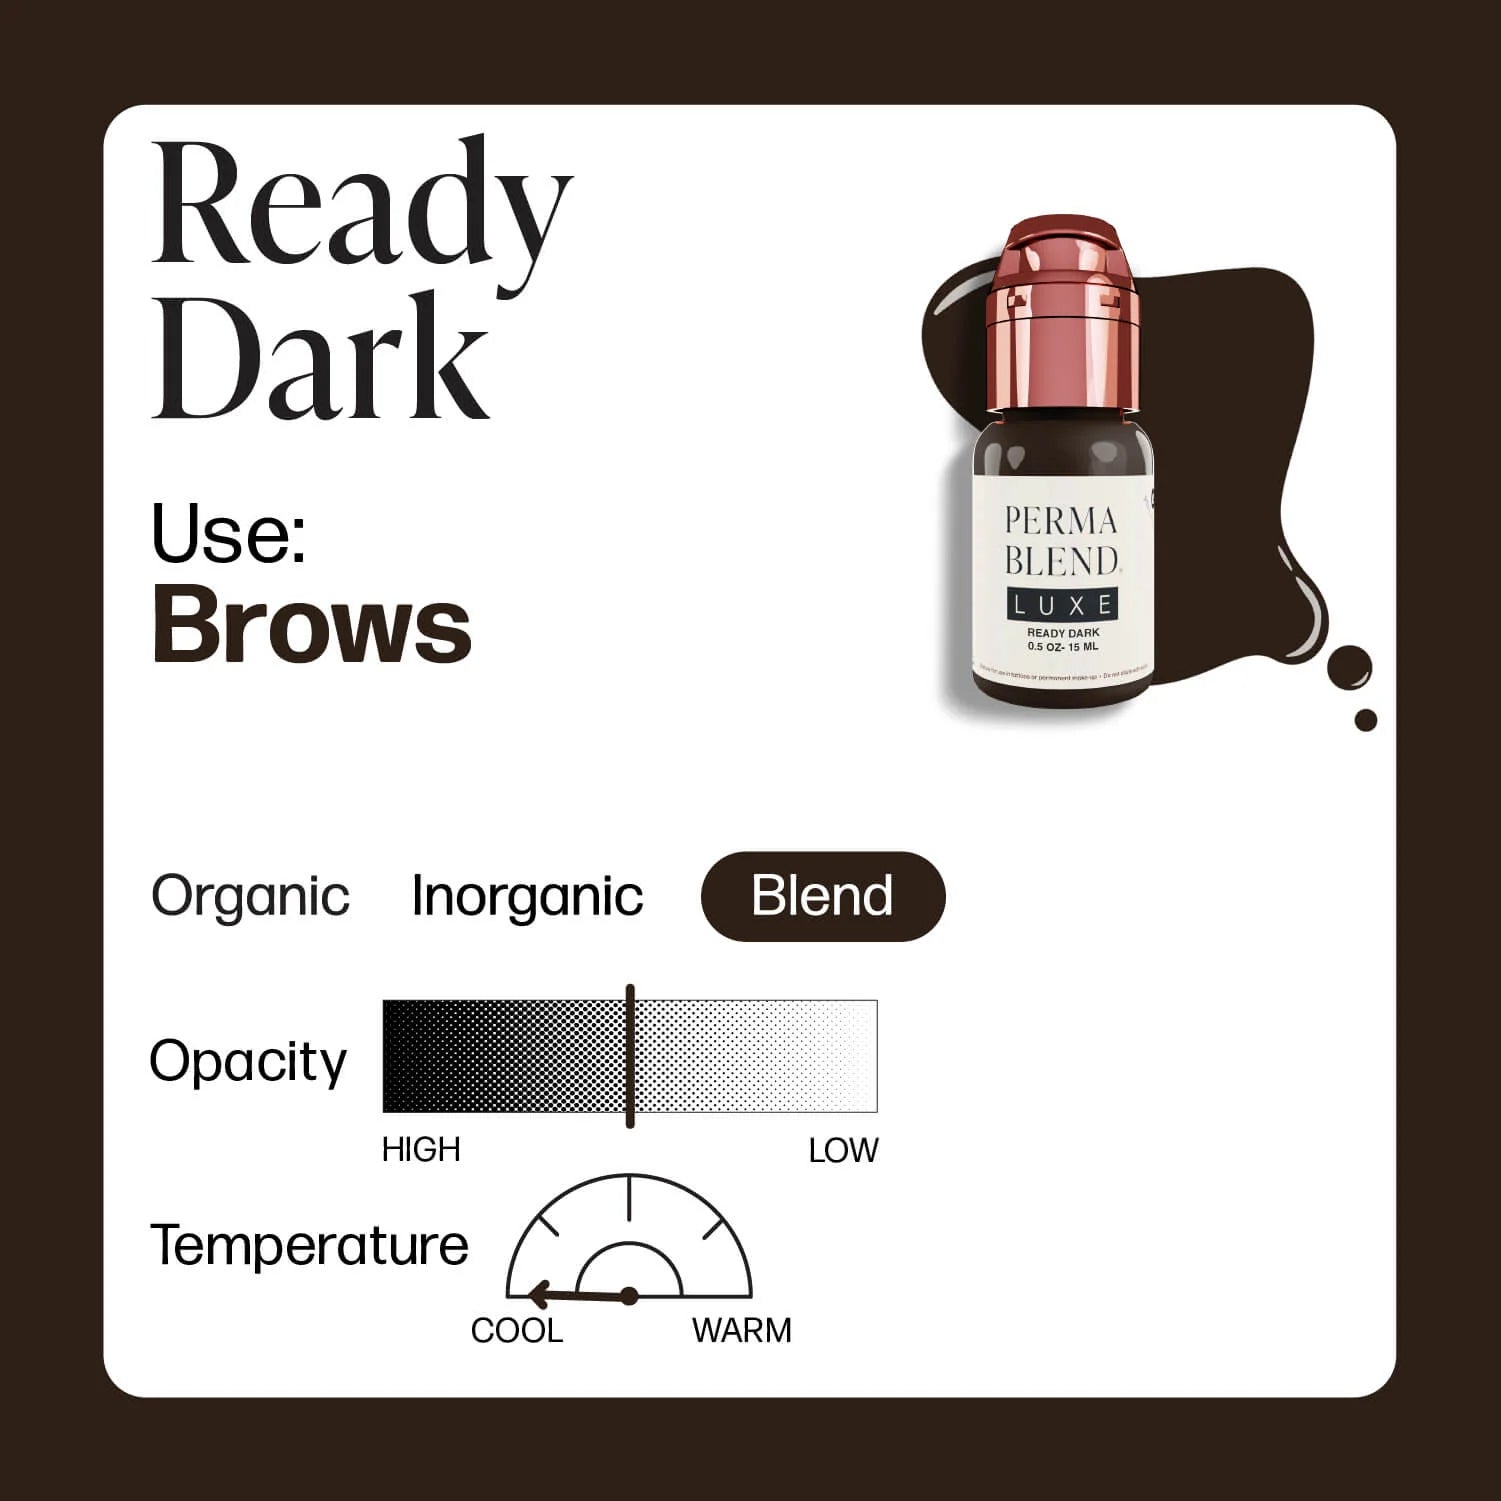 Perma Blend Luxe - Ready Dark